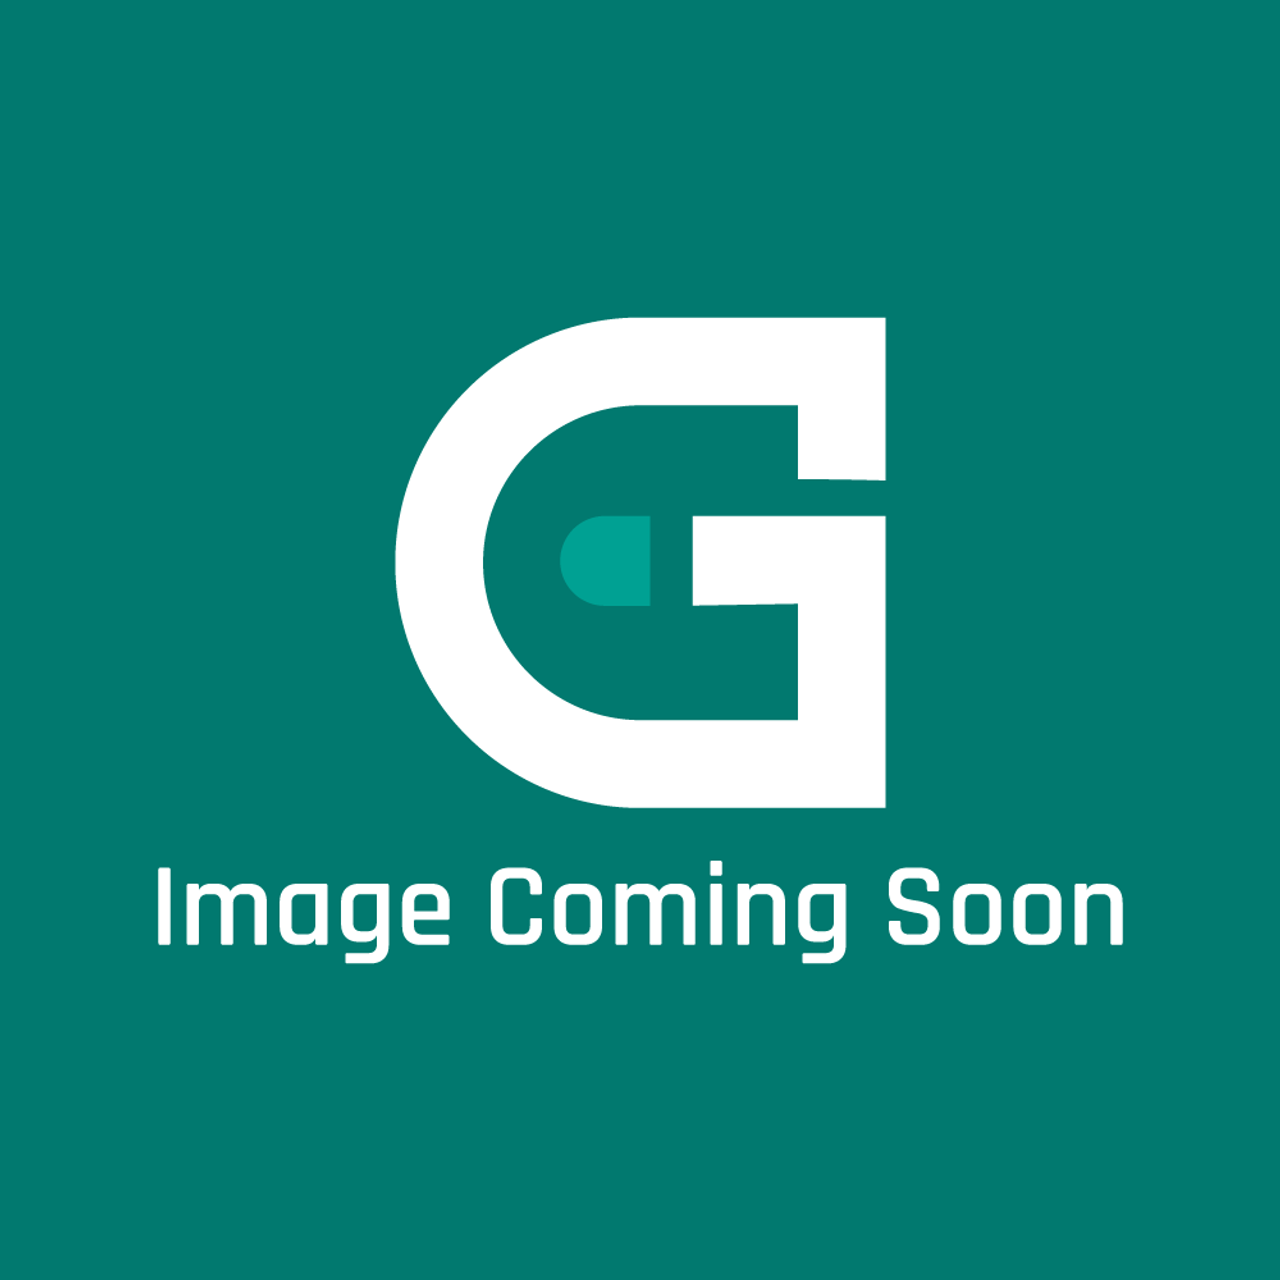 Frigidaire - Electrolux 316542404 Lp Conversion Kit - Image Coming Soon!